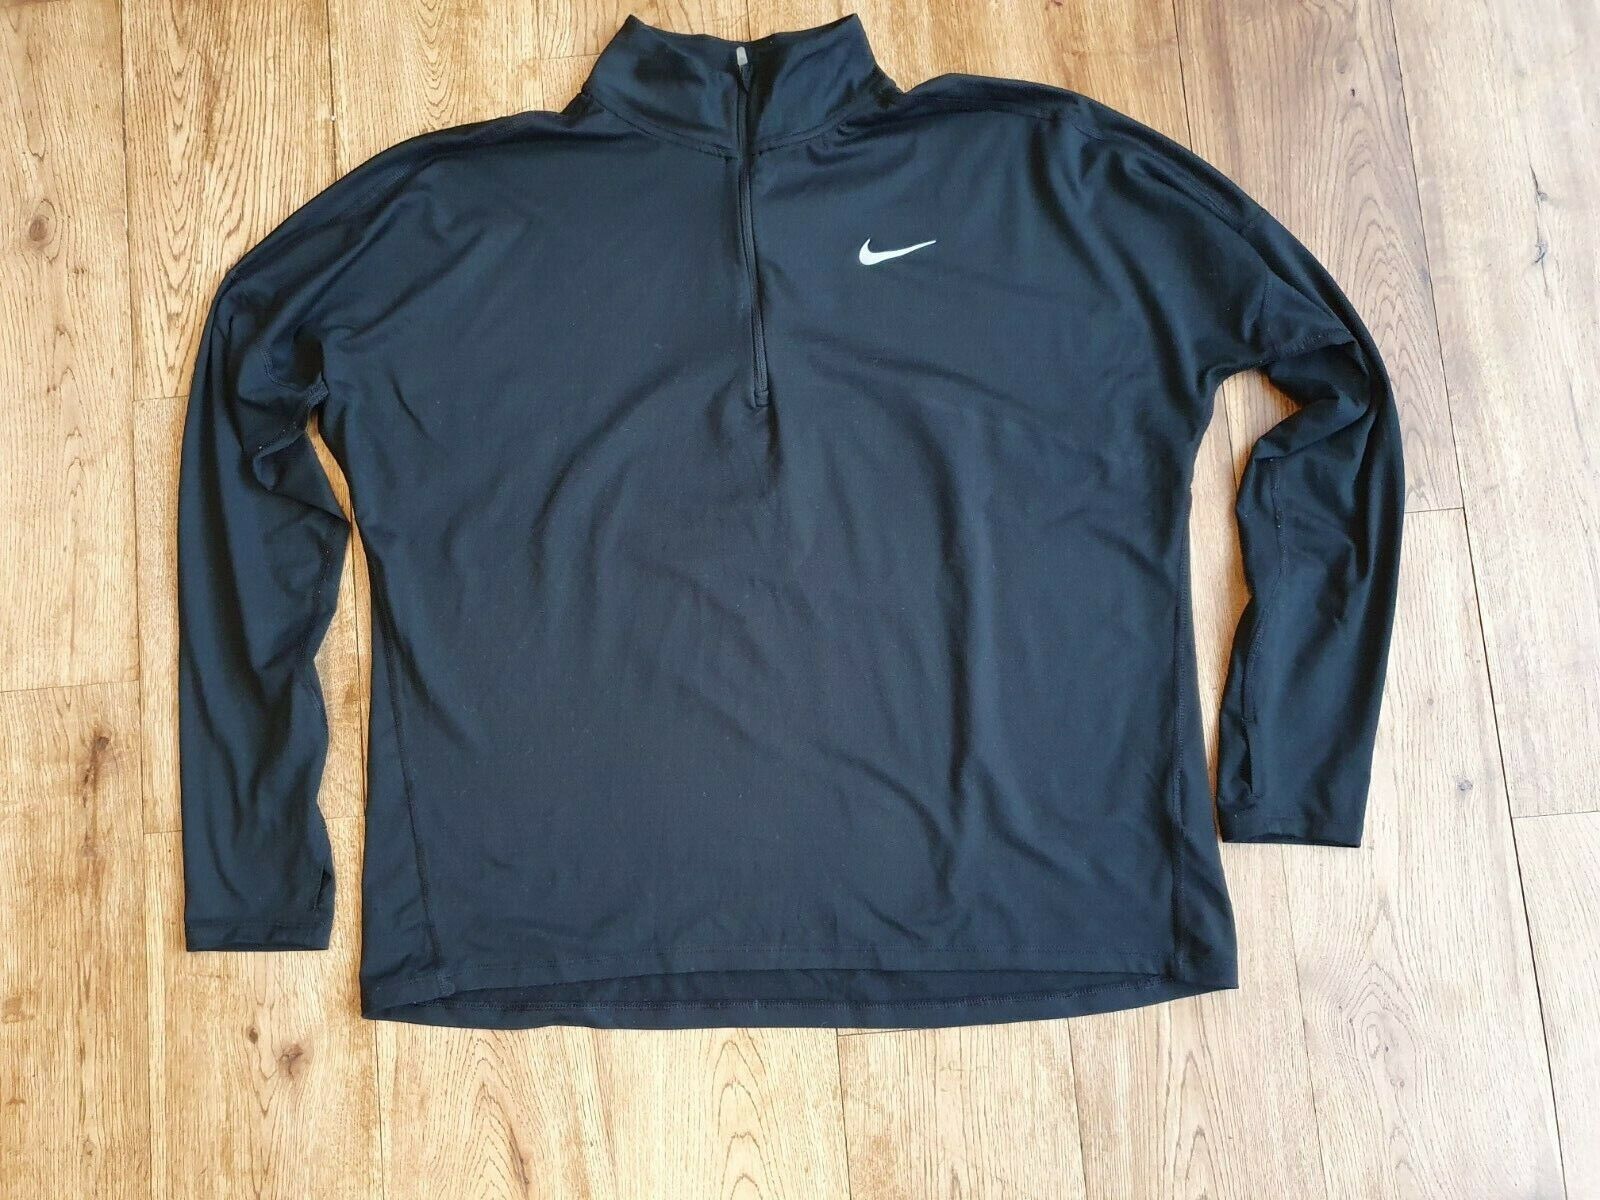 Nike Running Charlotte Mall black long sleeve Mail order cheap men's top t XL size shirt